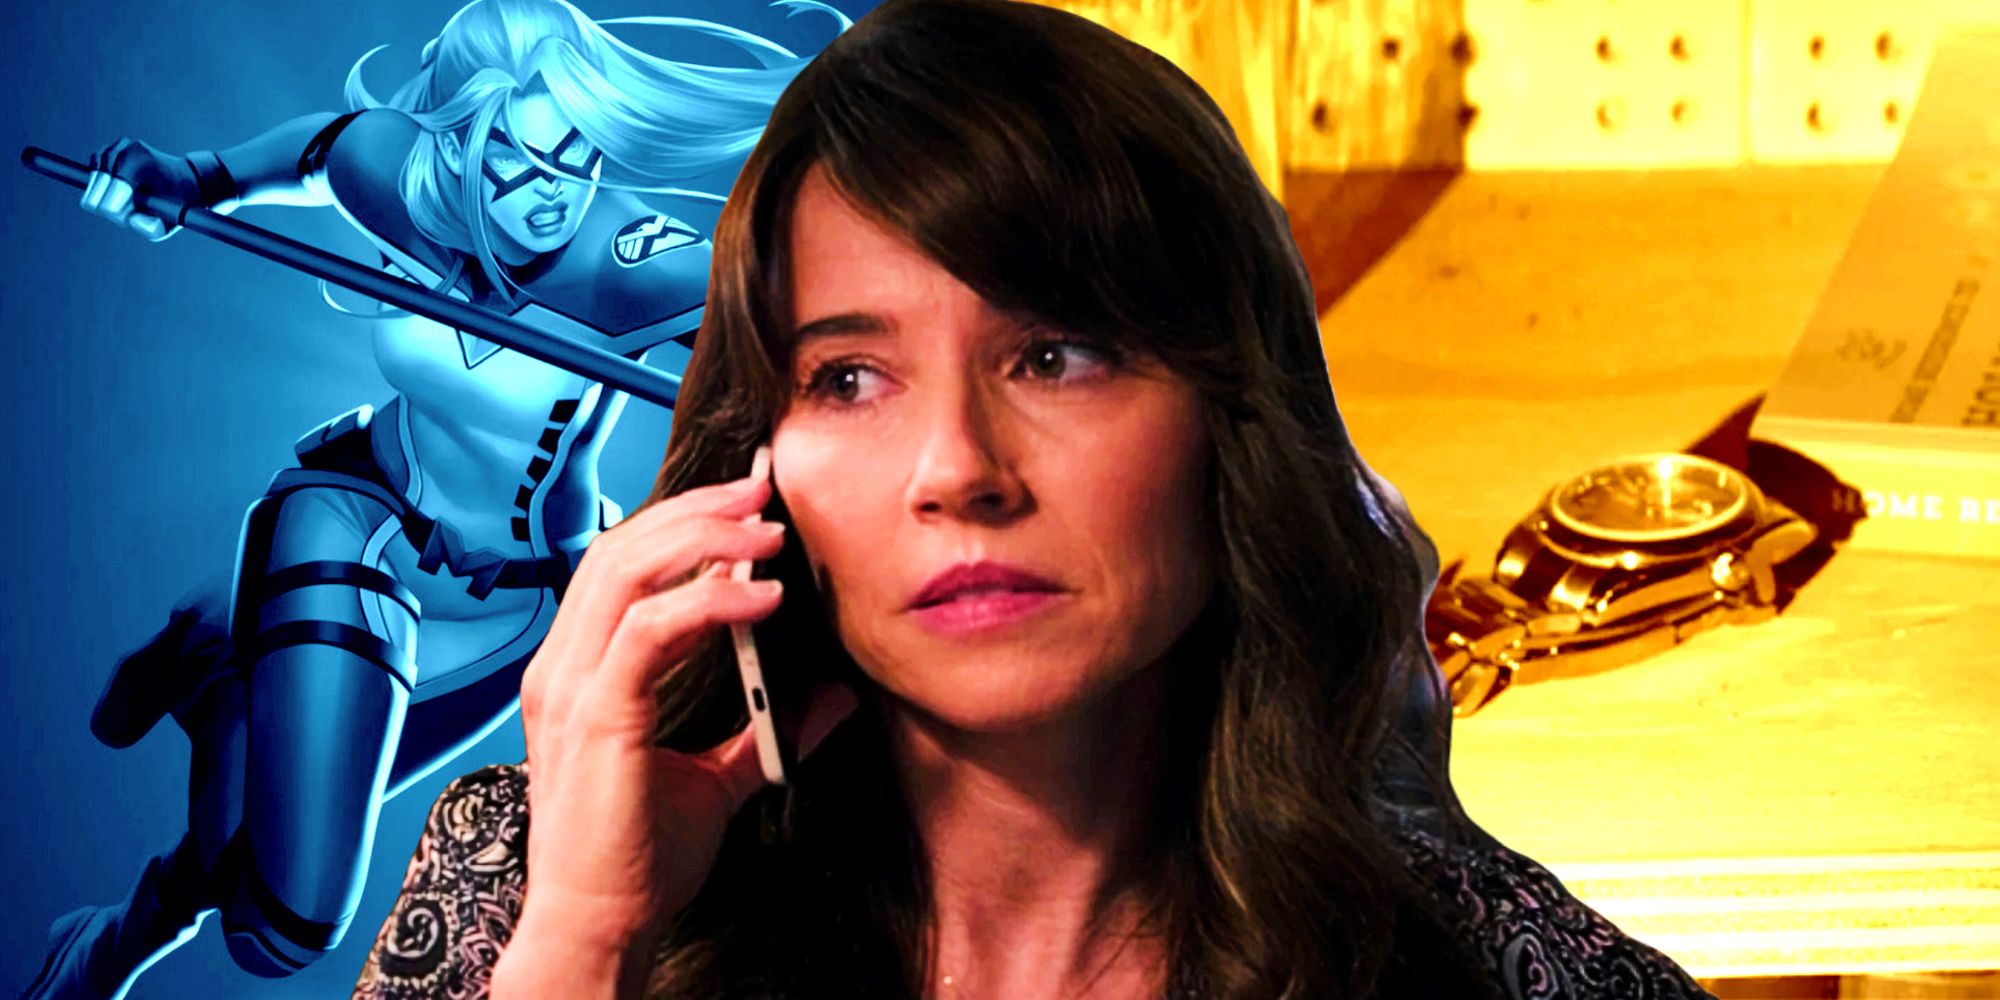 Linda Cardellini as Laura Barton with Mockingbird and Avengers Watch in Hawkeye